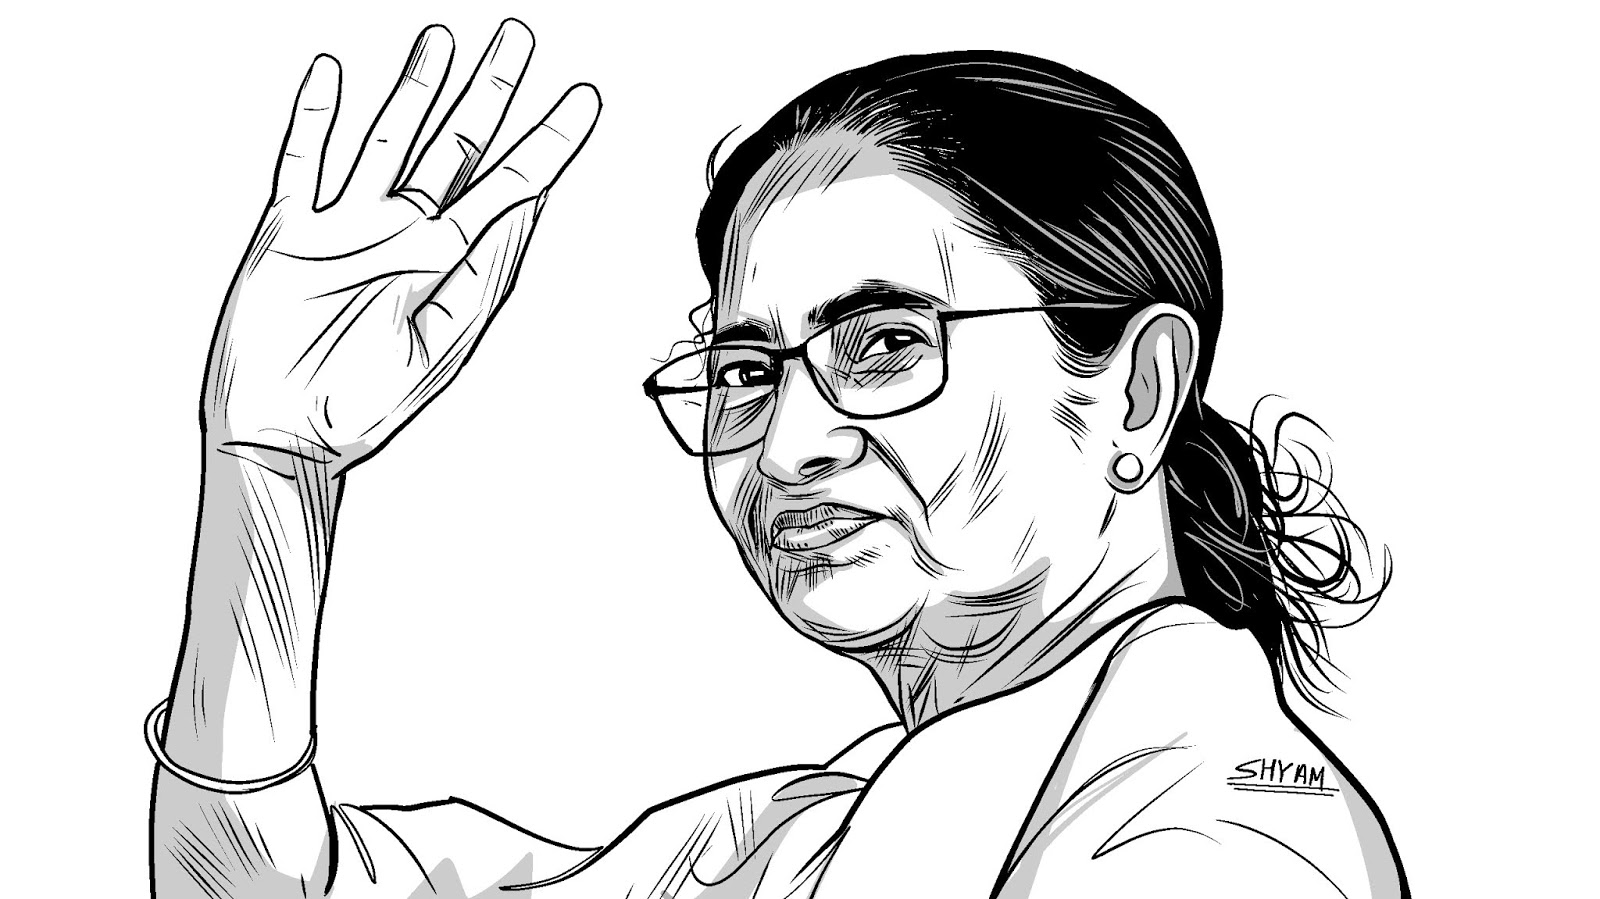 Mamata Banerjee's artwork will be displayed at Rashtrapati Bhawan: Kovind |  Current Affairs News National - Business Standard